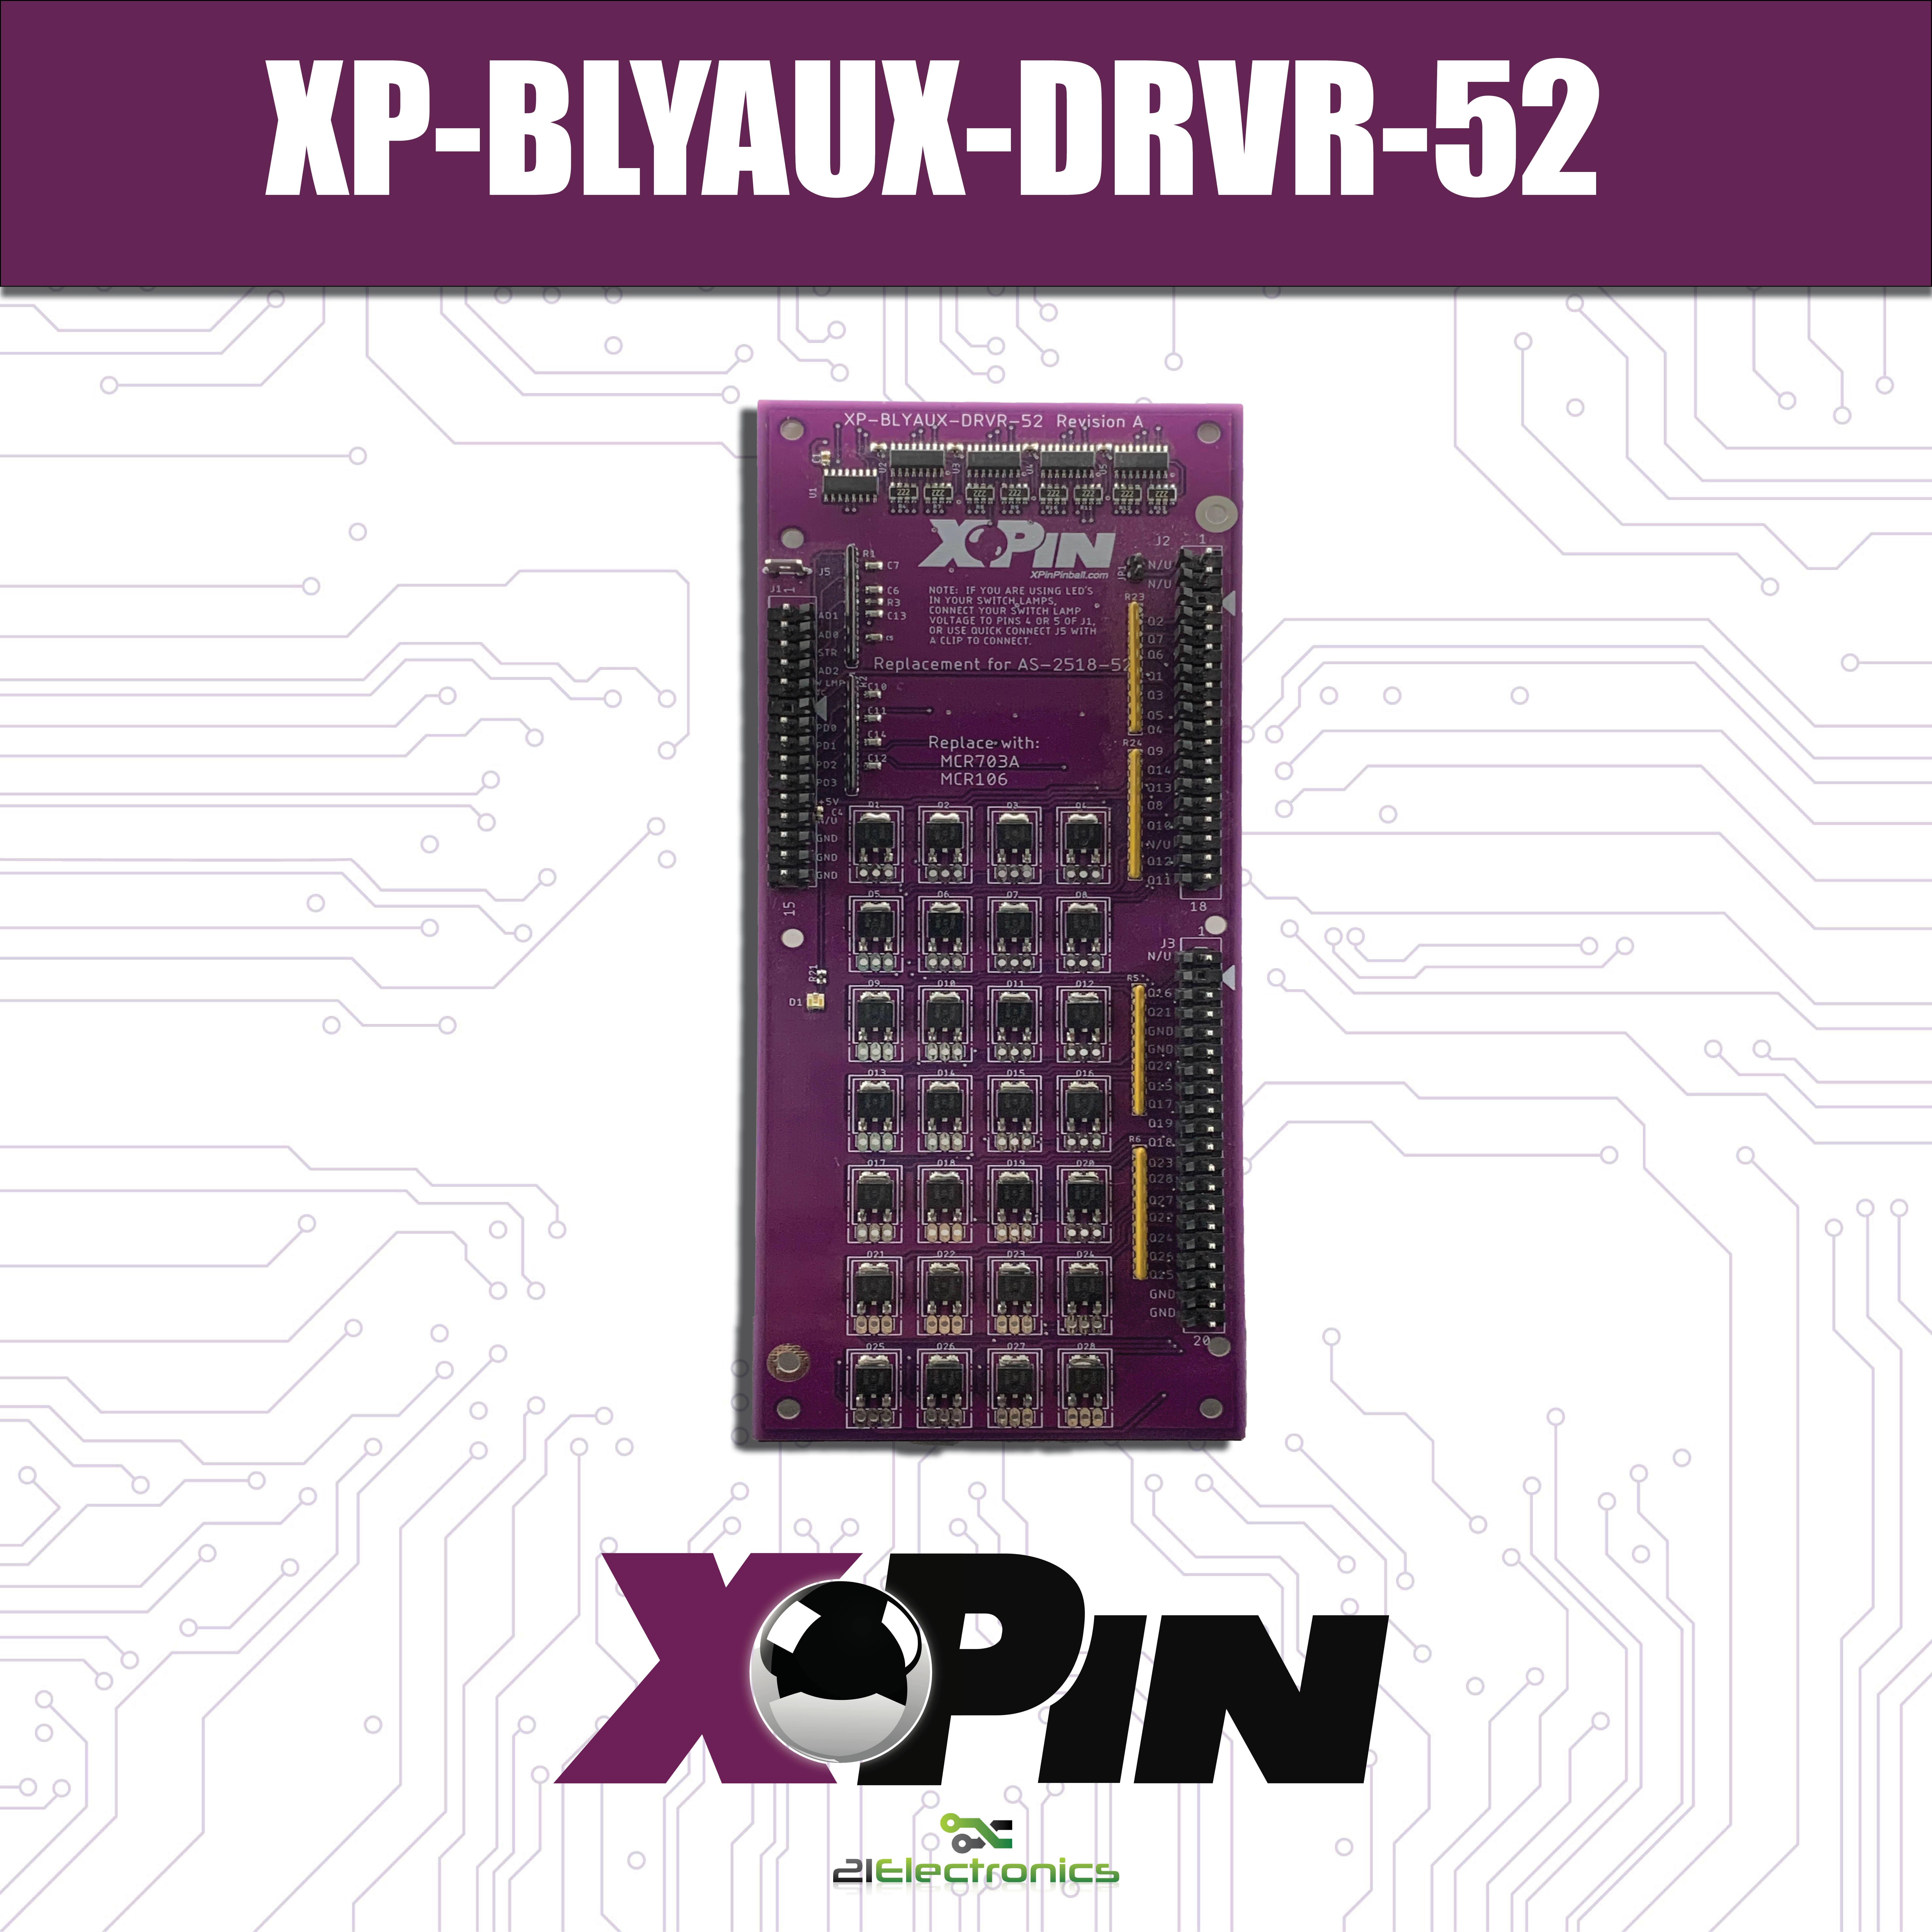 XP-BLYAUX-DRVR-52